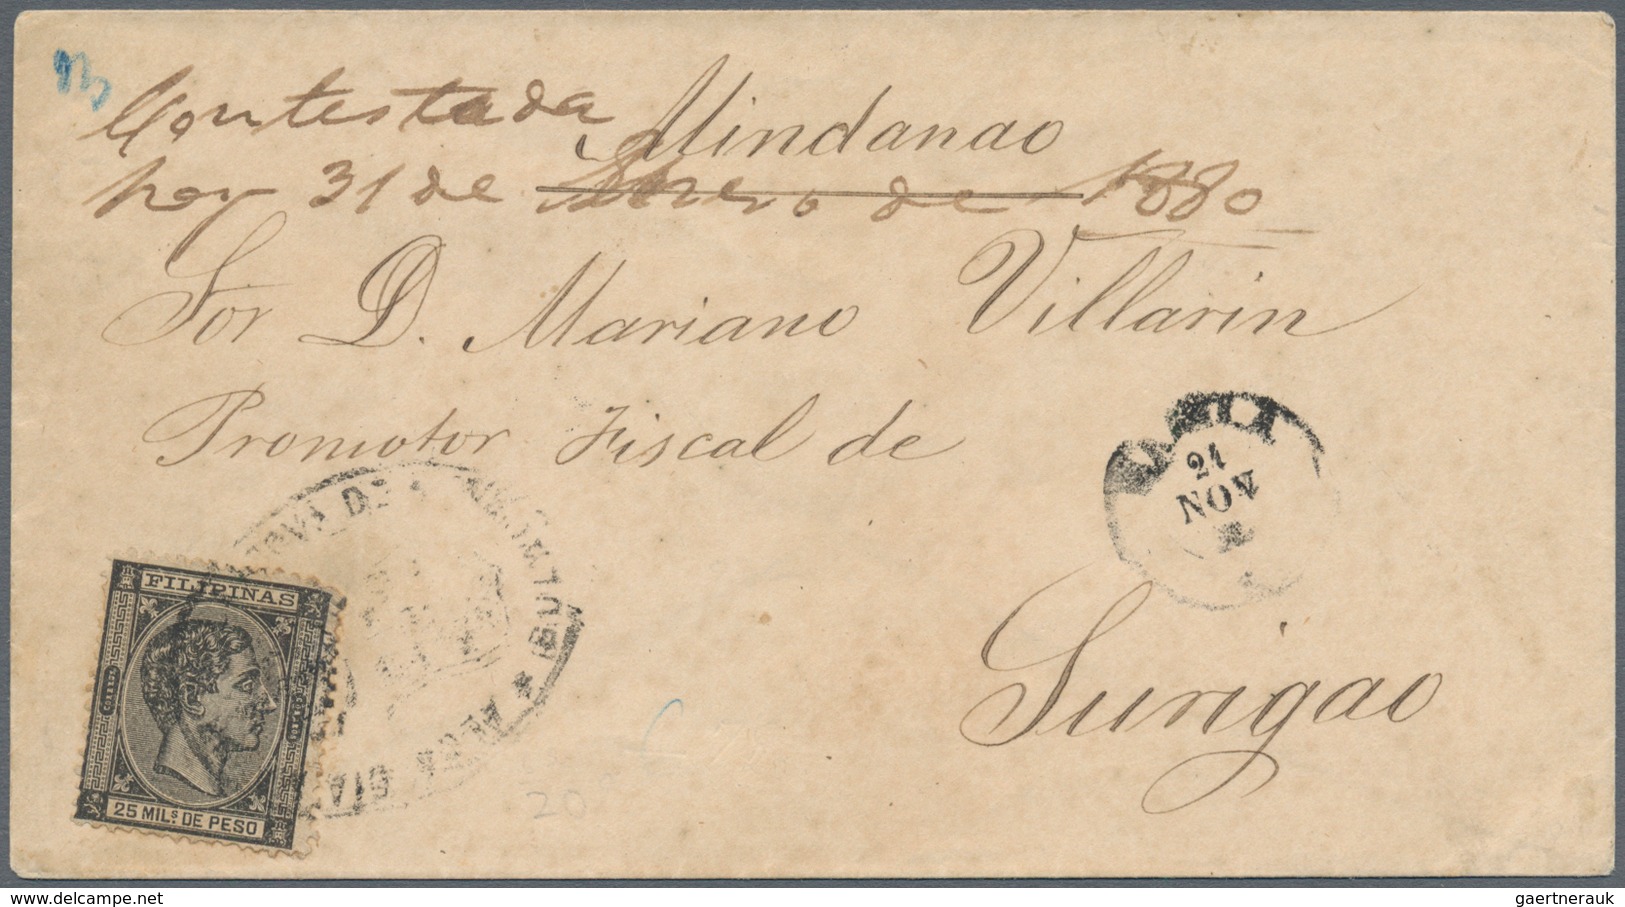 00406 Philippinen: 1878, 25 Mils. Black On Cover From Bulacan To Surigao (Mindanao), Canc. "Alc. Mayor De - Philippines